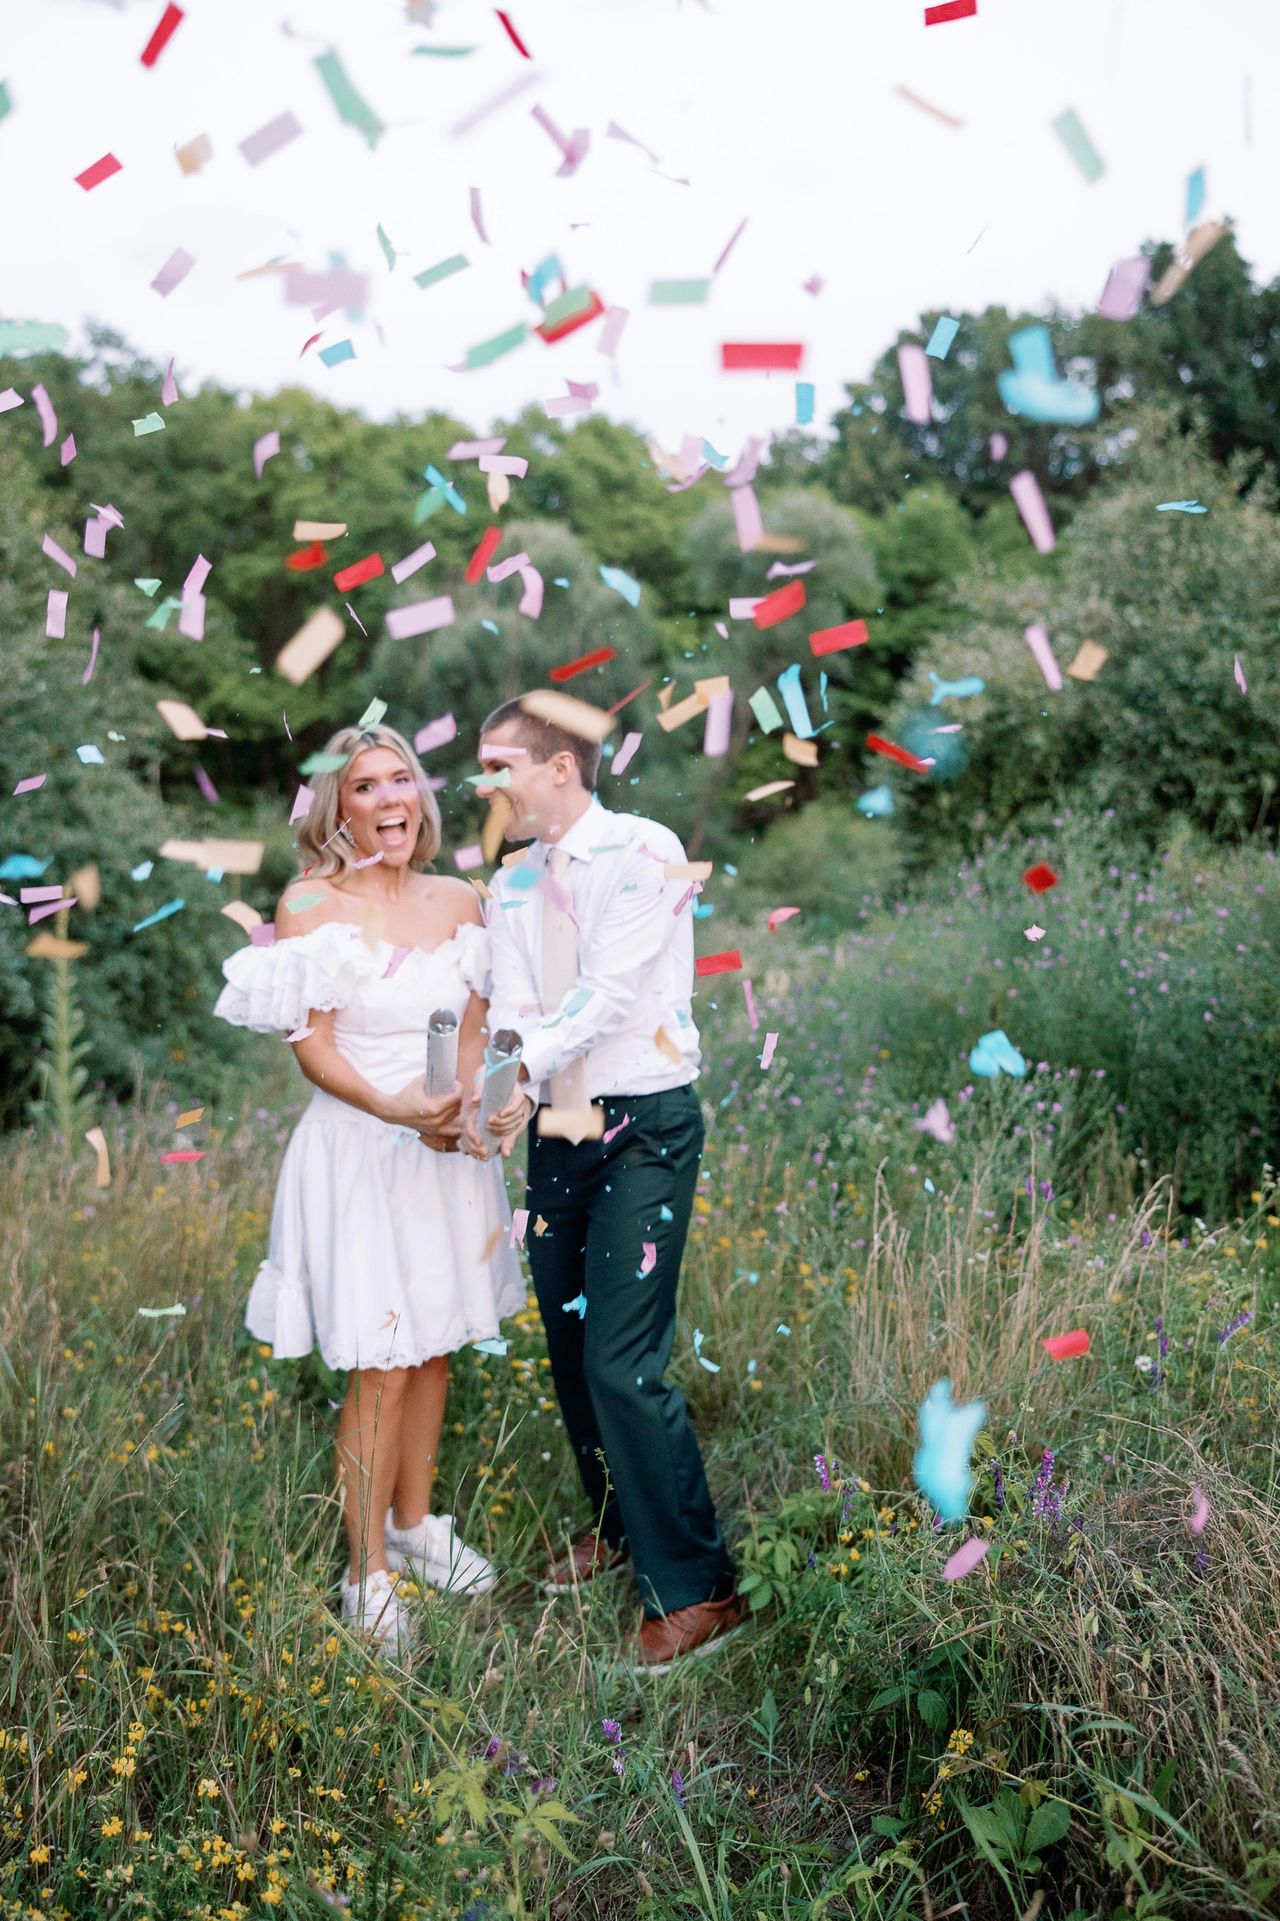 What to Wear to a Summer Wedding: 30 Best Guest Attire Options - Zola  Expert Wedding Advice